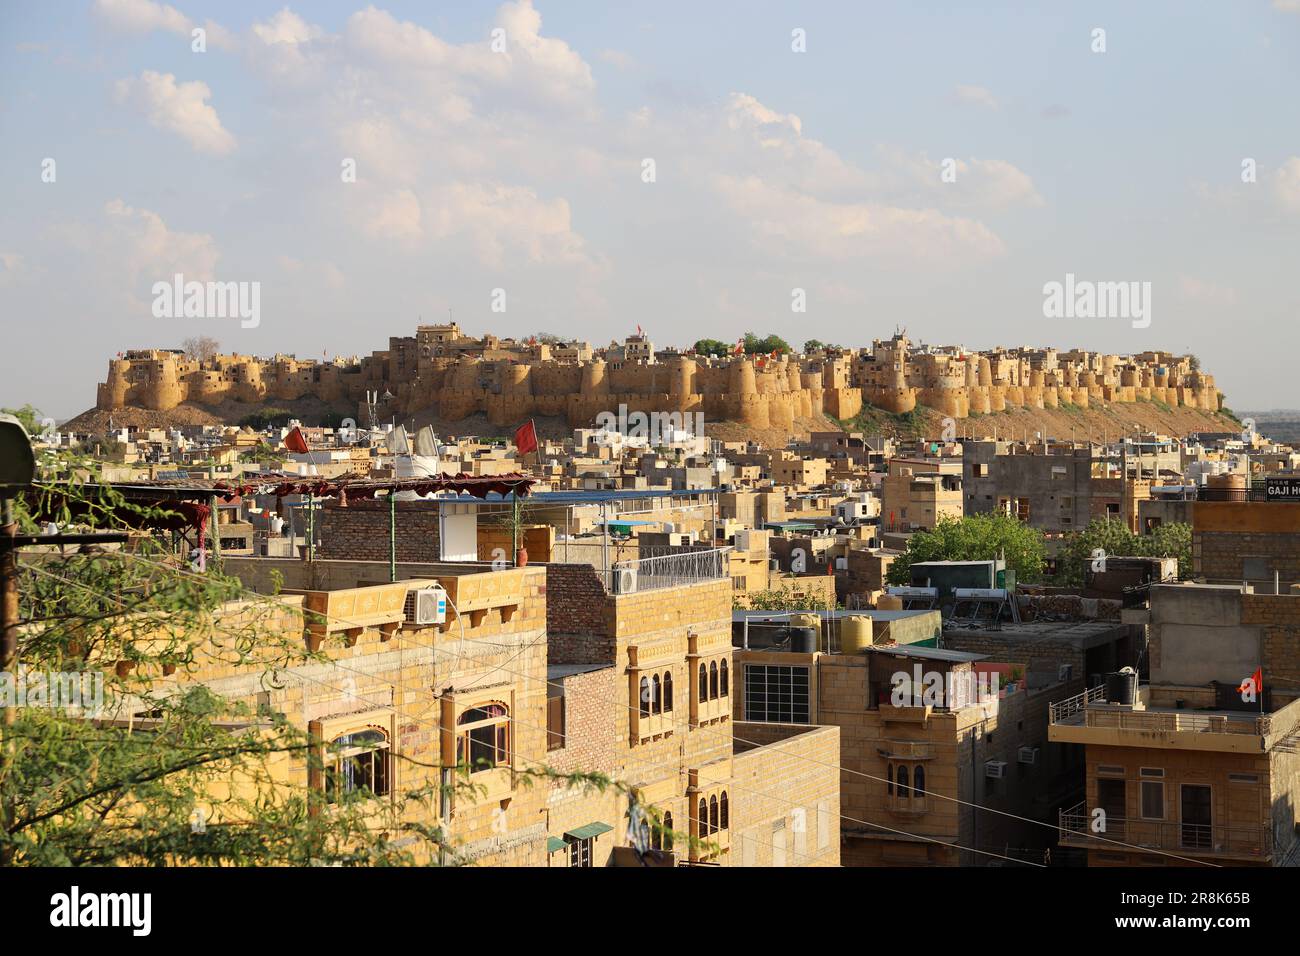 Jaisalmer - The Golden City of India Stock Photo